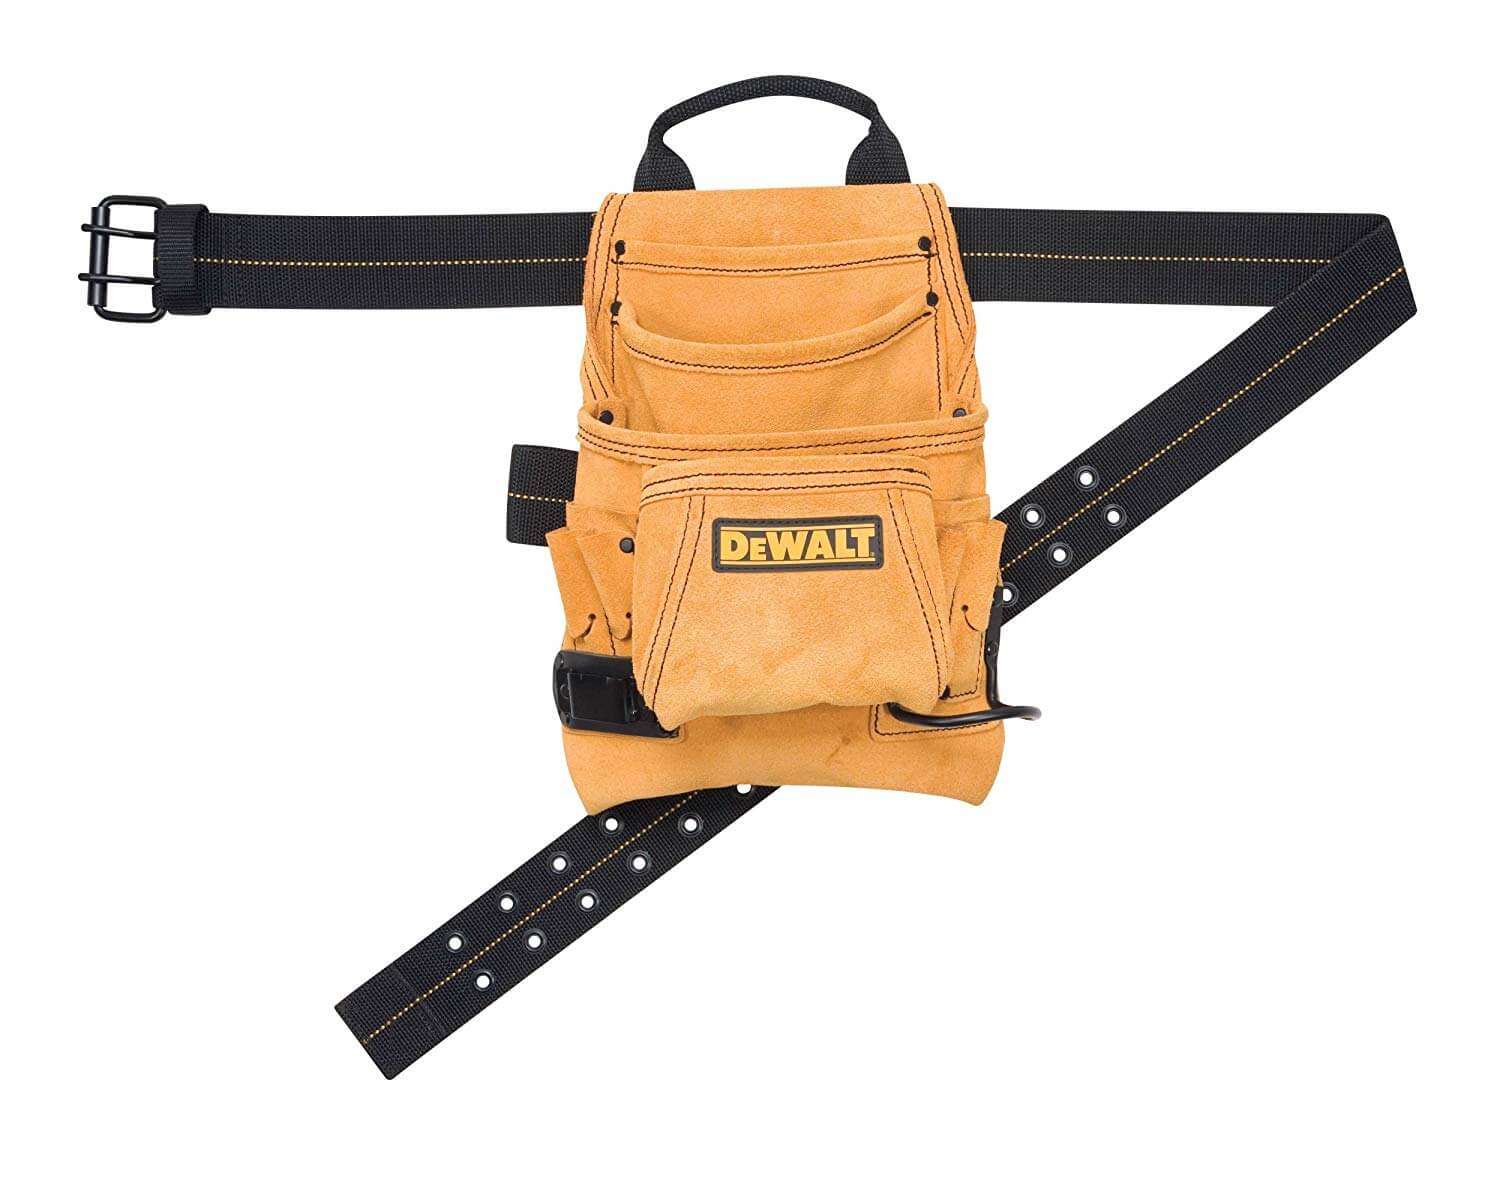 DeWalt 10 Pocket Carpenter's Nail & Tool Bag - wise-line-tools